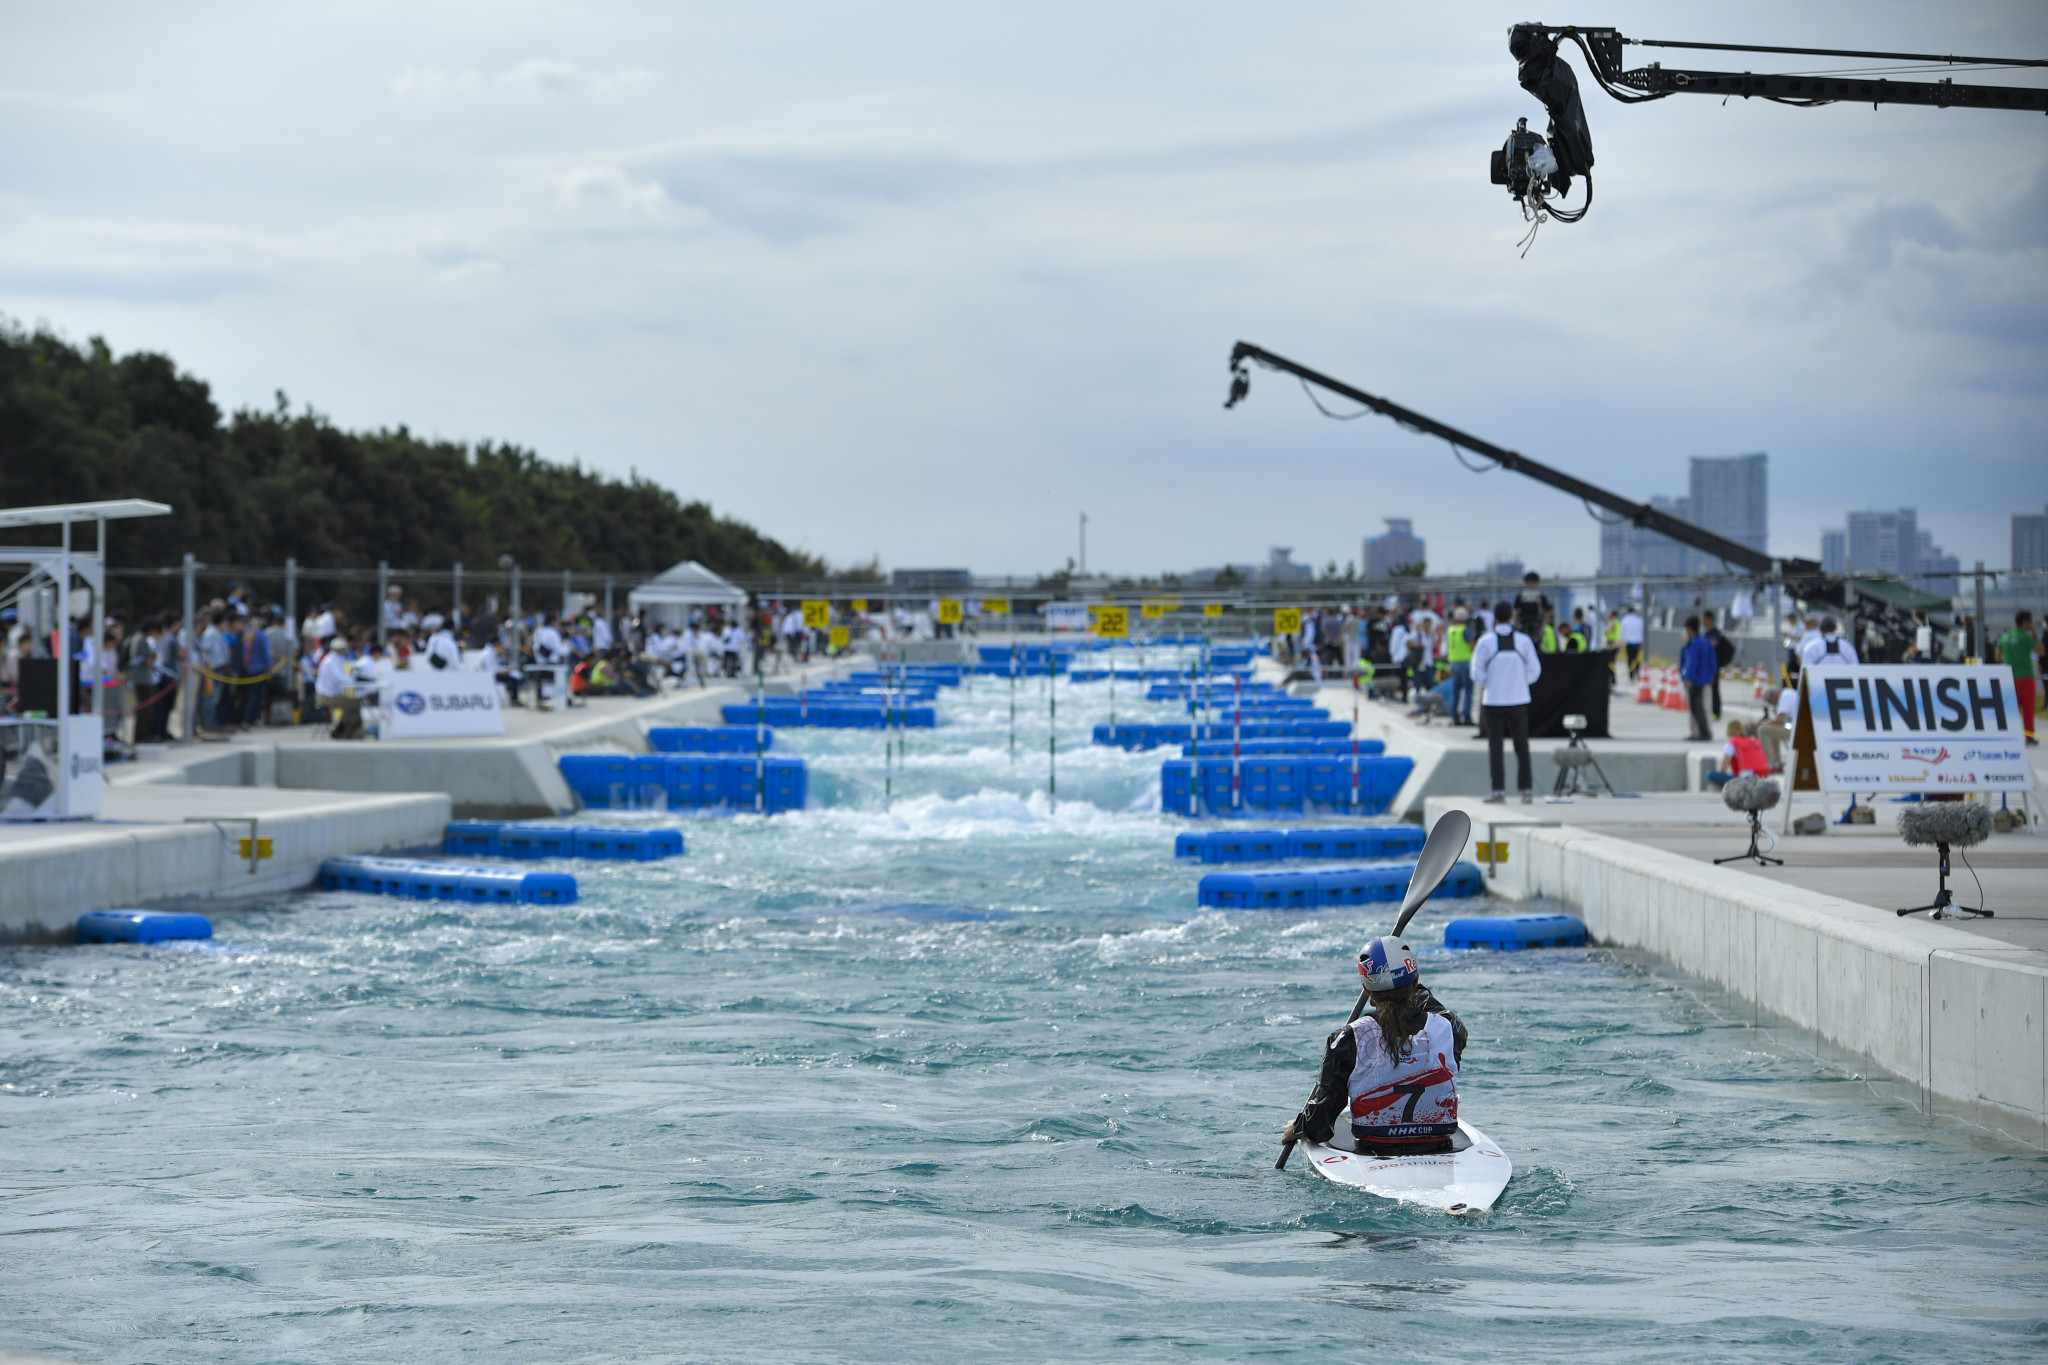 Tokyo 2020 canoe slalom venue opens for athlete practice